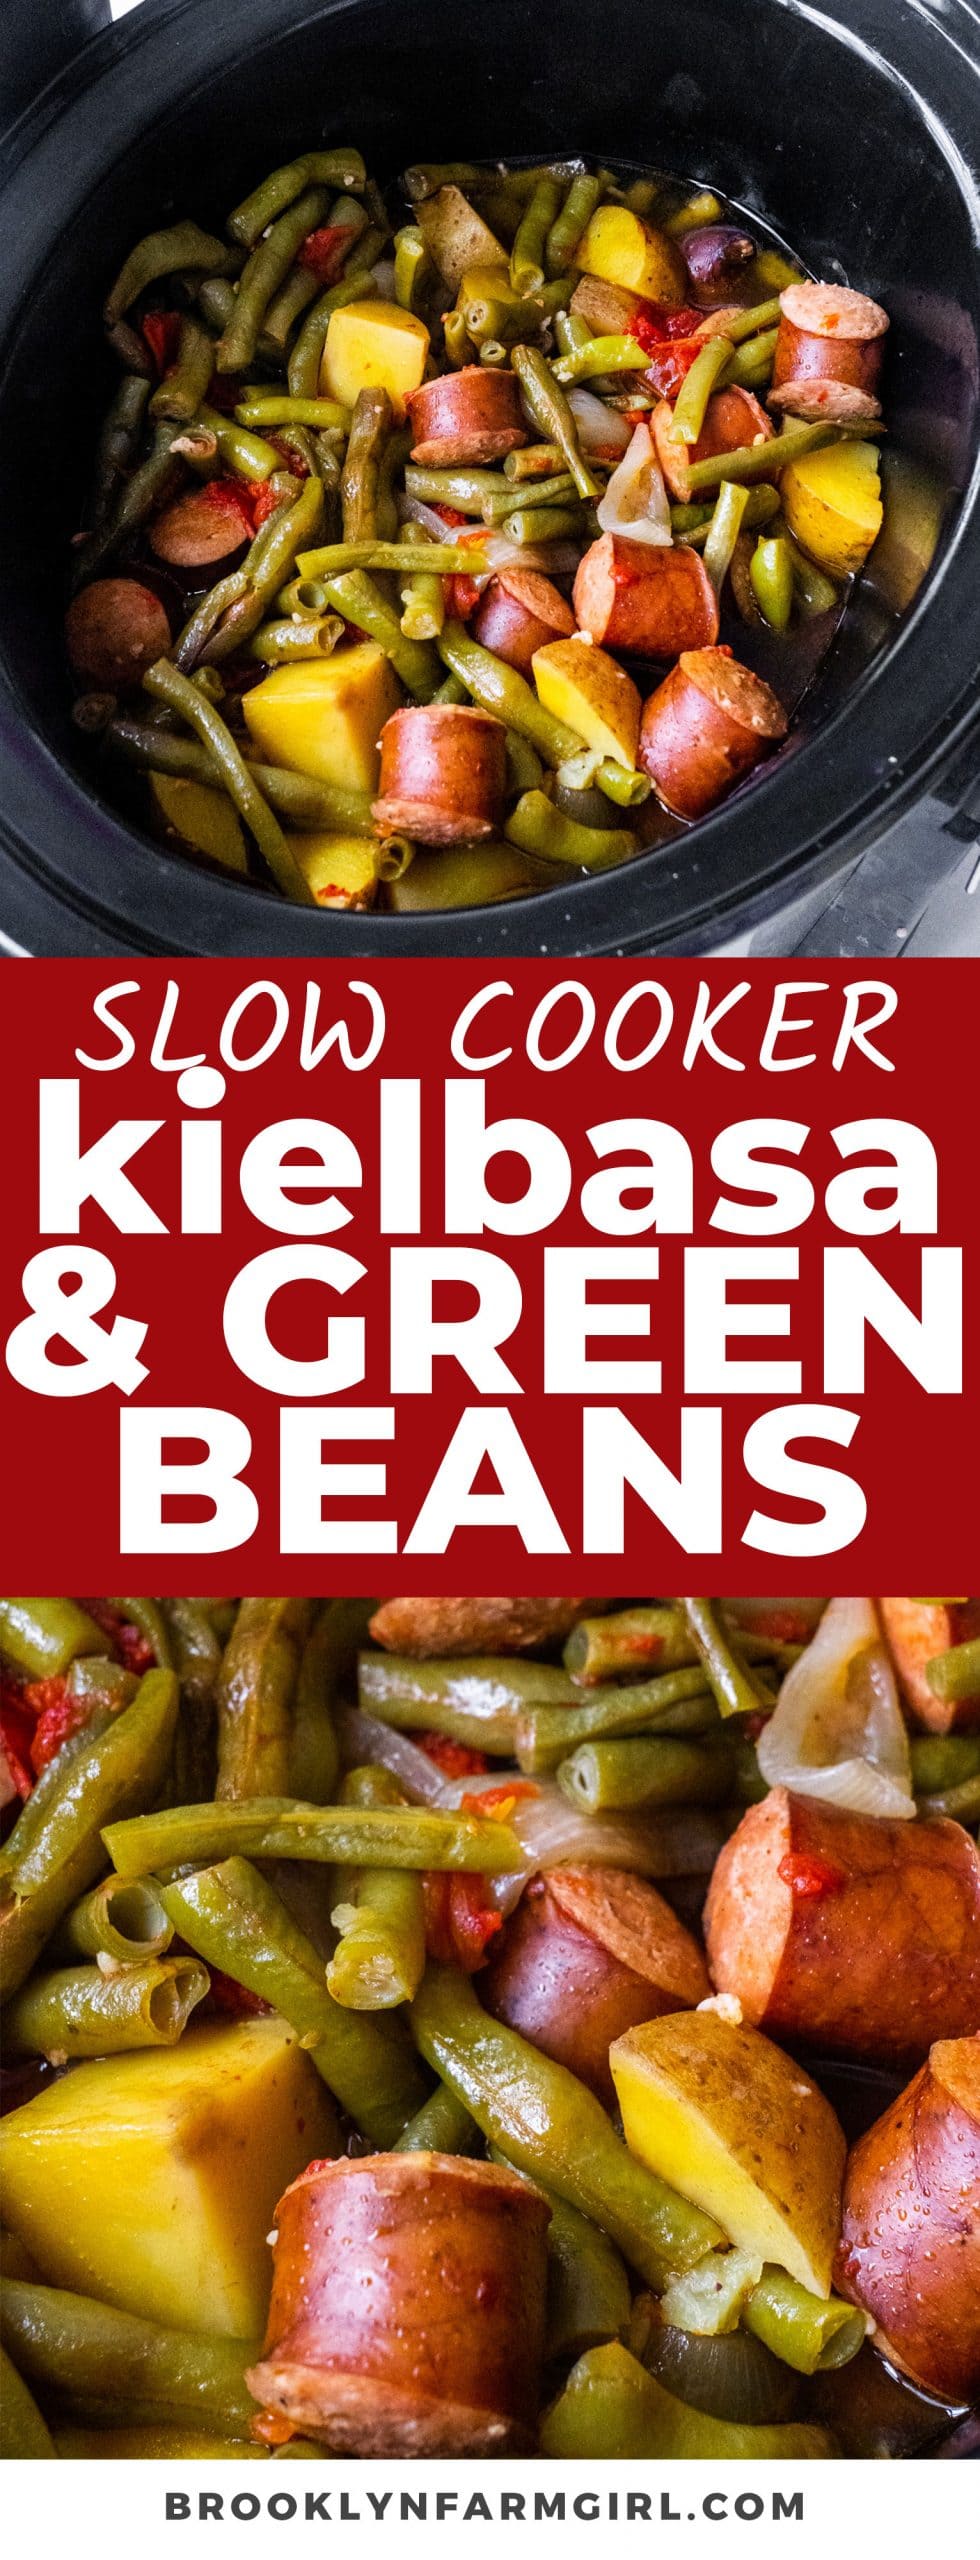 https://brooklynfarmgirl.com/wp-content/uploads/2021/09/Slow-Cooker-Kielbasa-and-Green-Beans-4-scaled.jpg